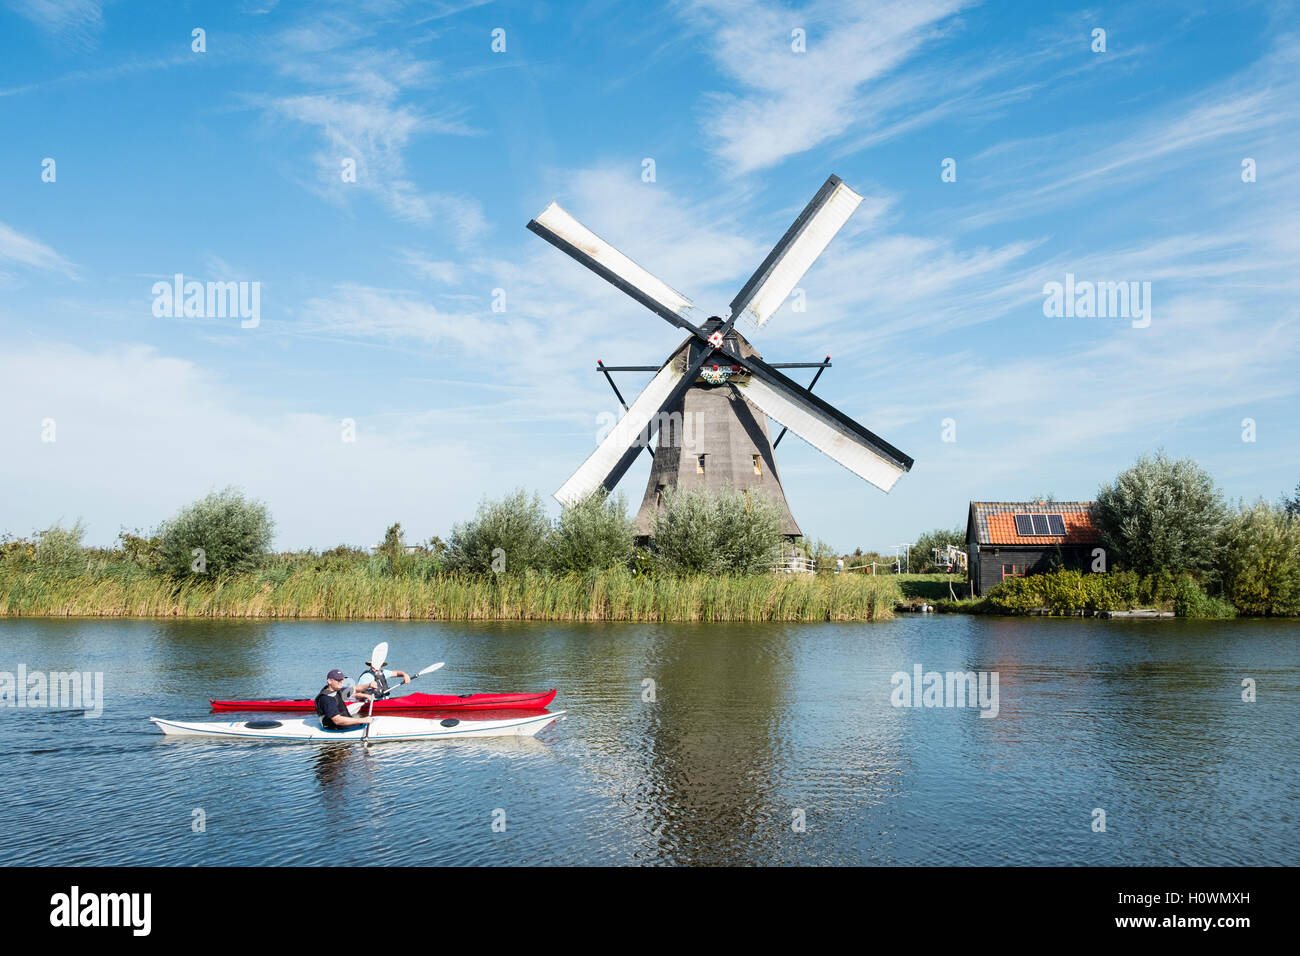 Zwei Männer in Kajaks im Kanal vor historischen Windmühlen bei Kinderdijk UNESCO-Weltkulturerbe in den Niederlanden Stockfoto